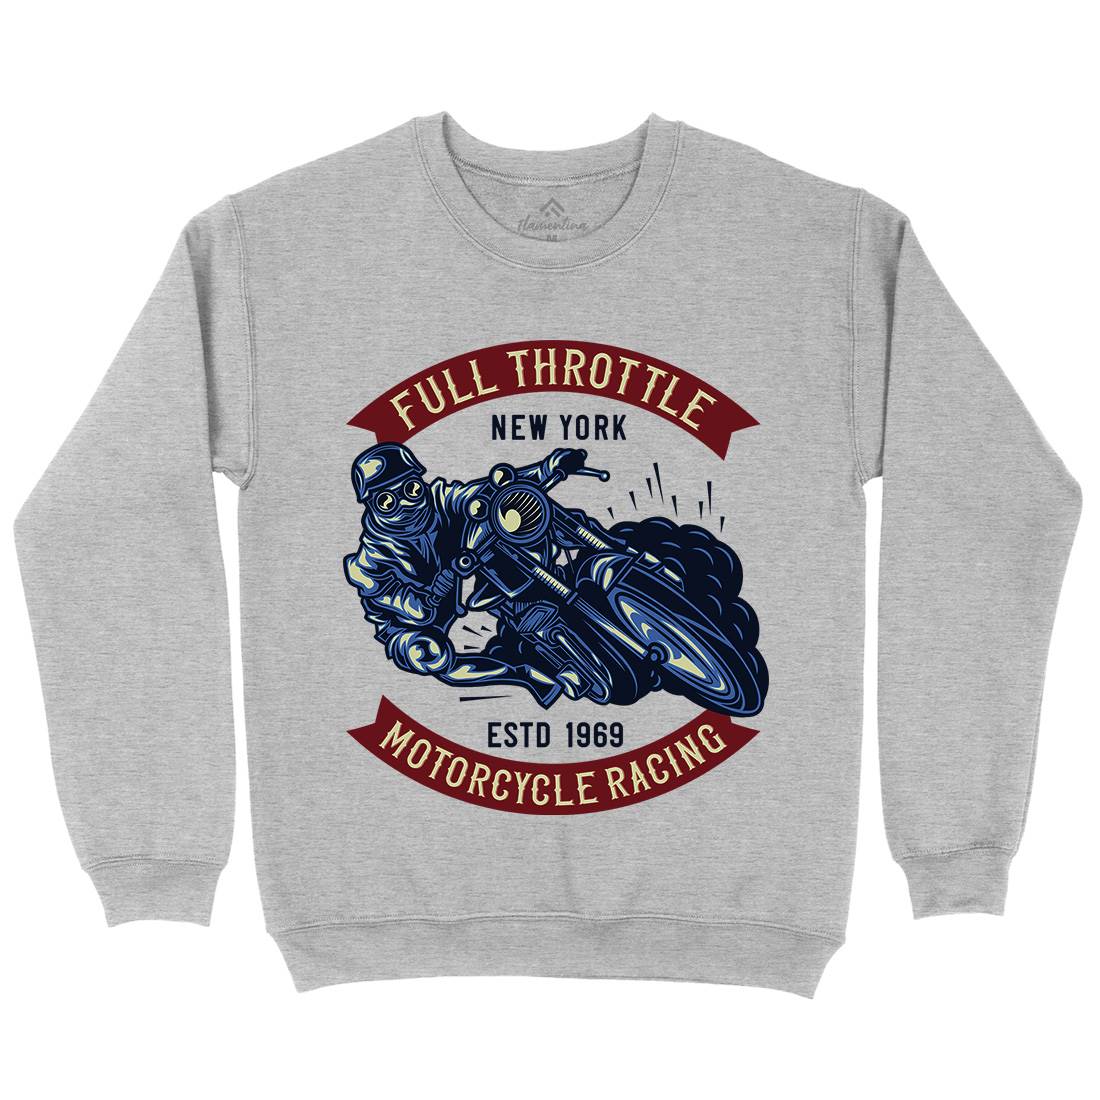 Full Throttle Kids Crew Neck Sweatshirt Motorcycles B138